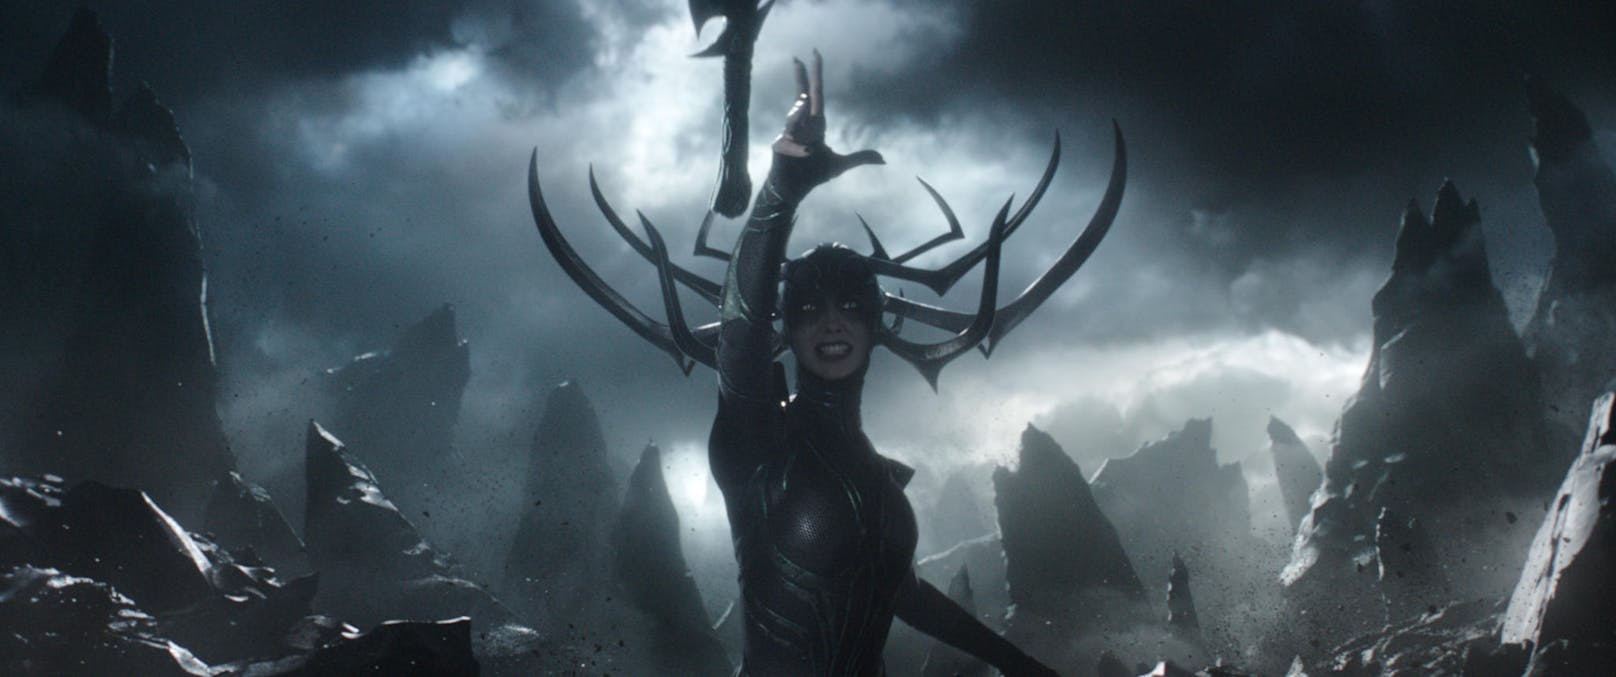 Cate Blanchett als Hela in "Thor: Ragnarok"